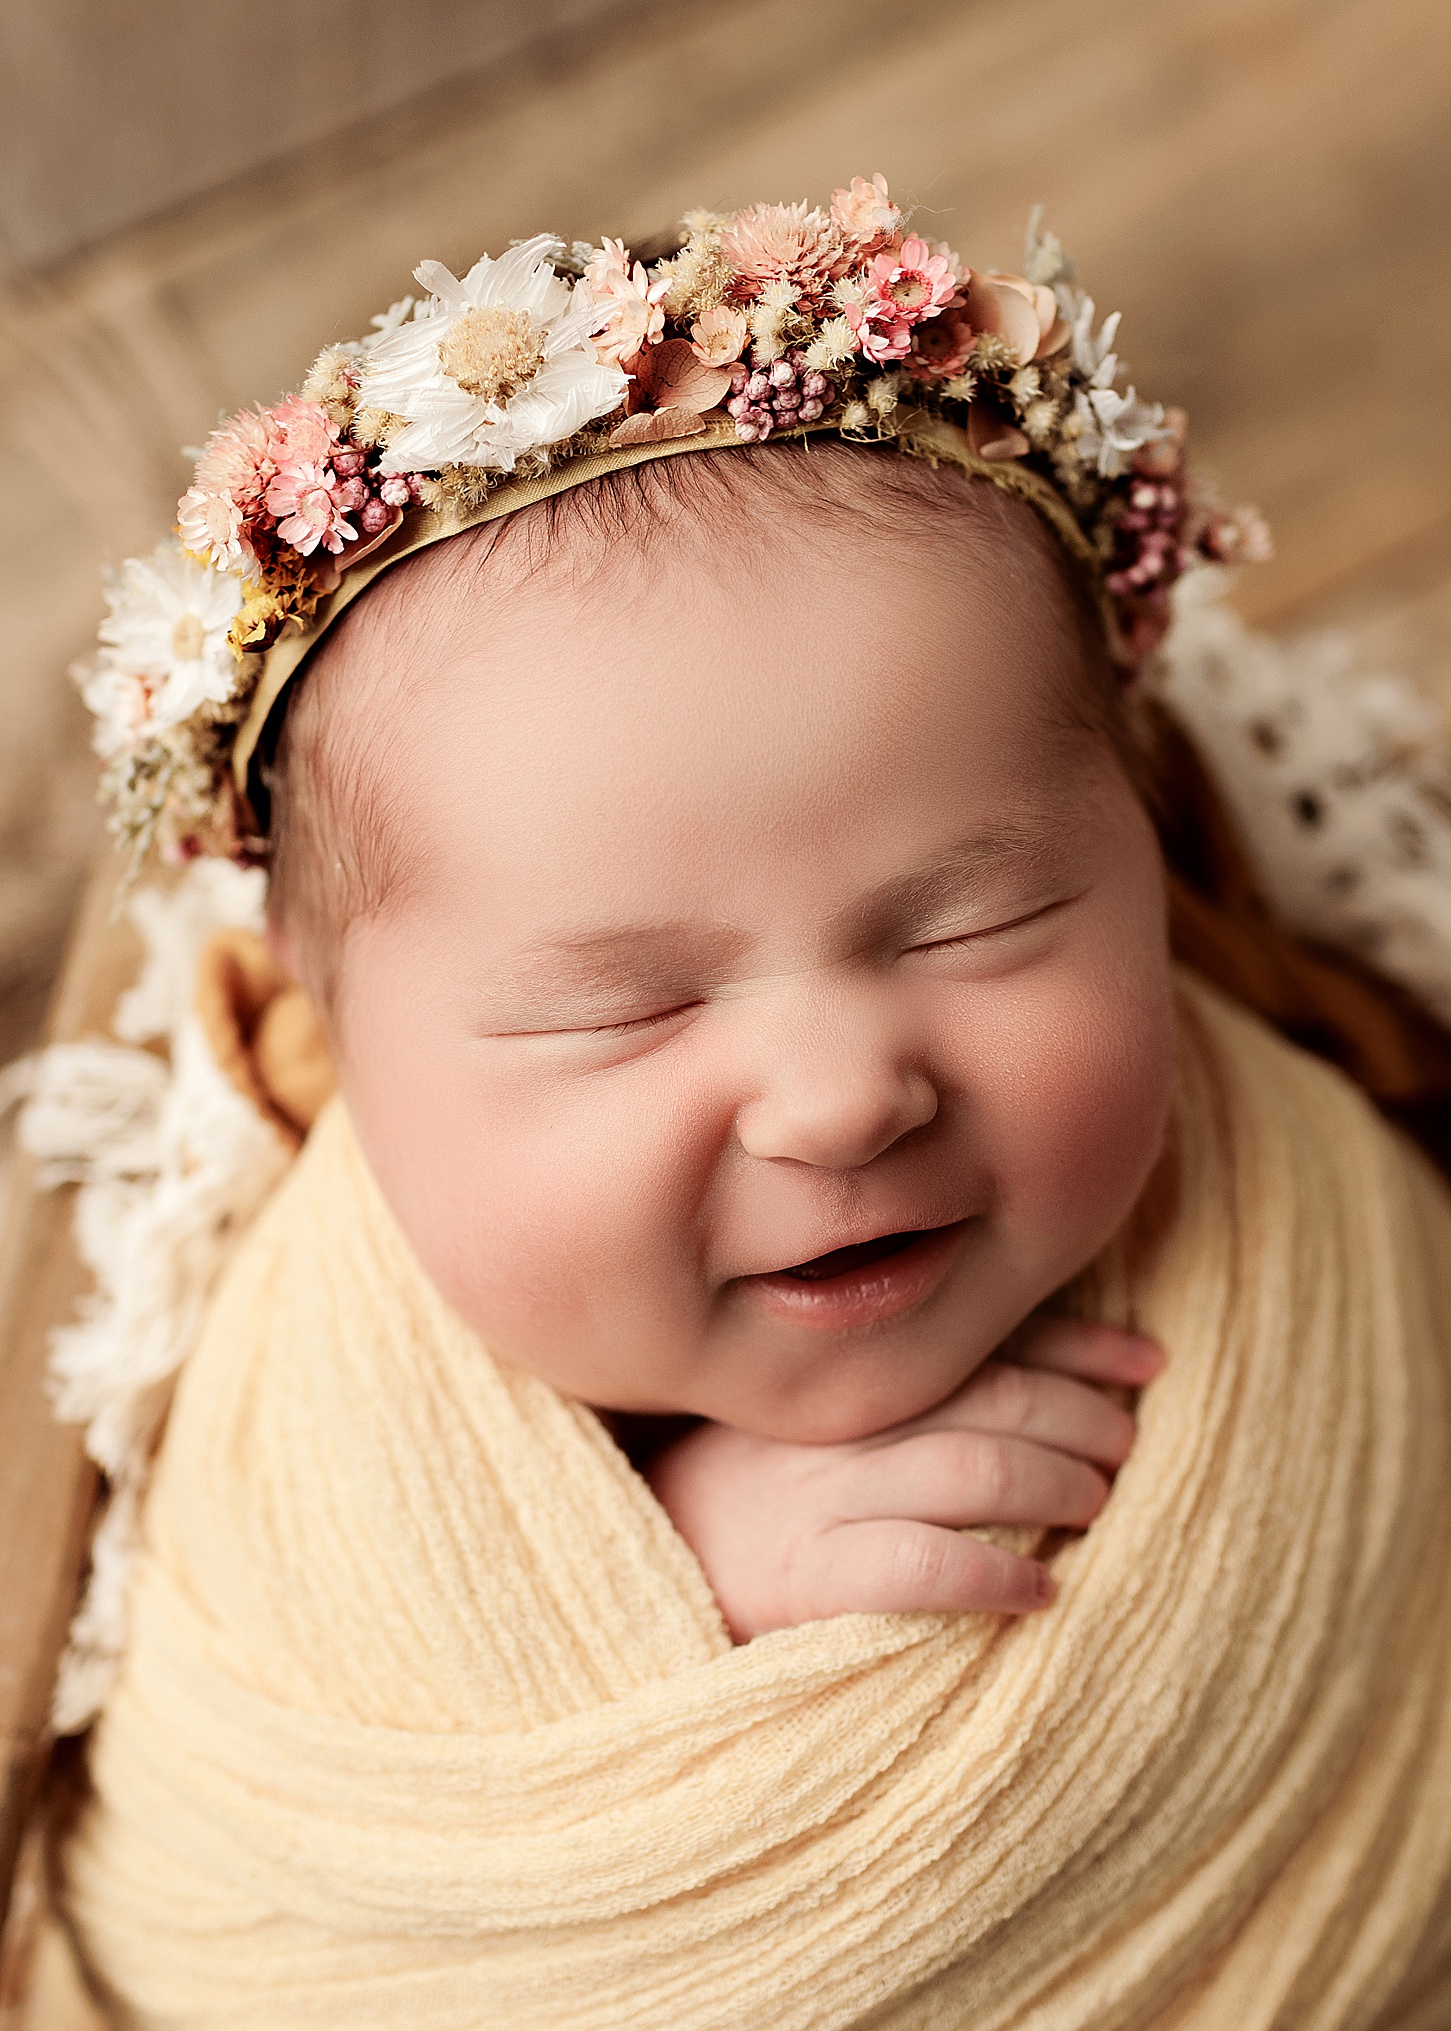 Beginners newborn photography course